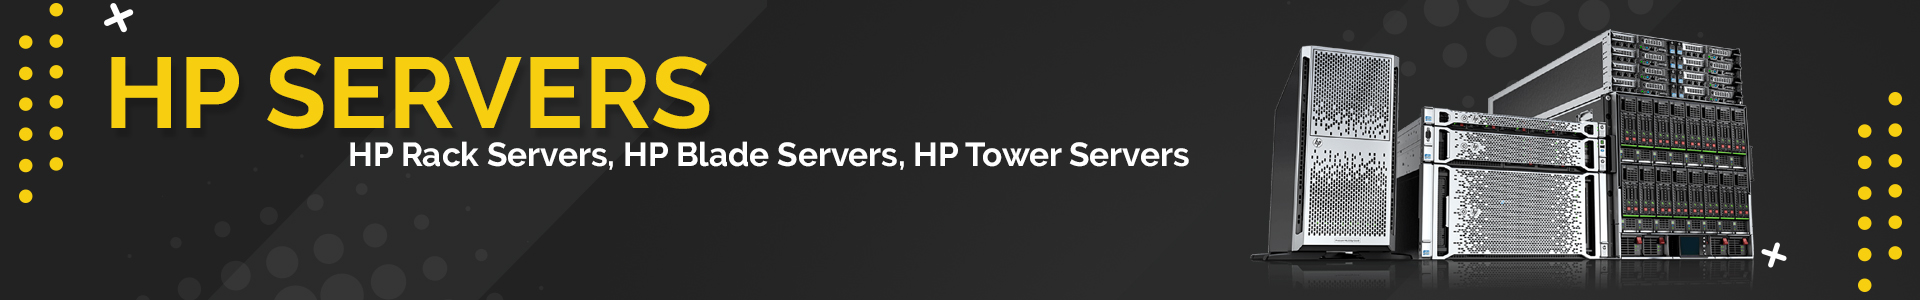 HP Servers in Pakistan